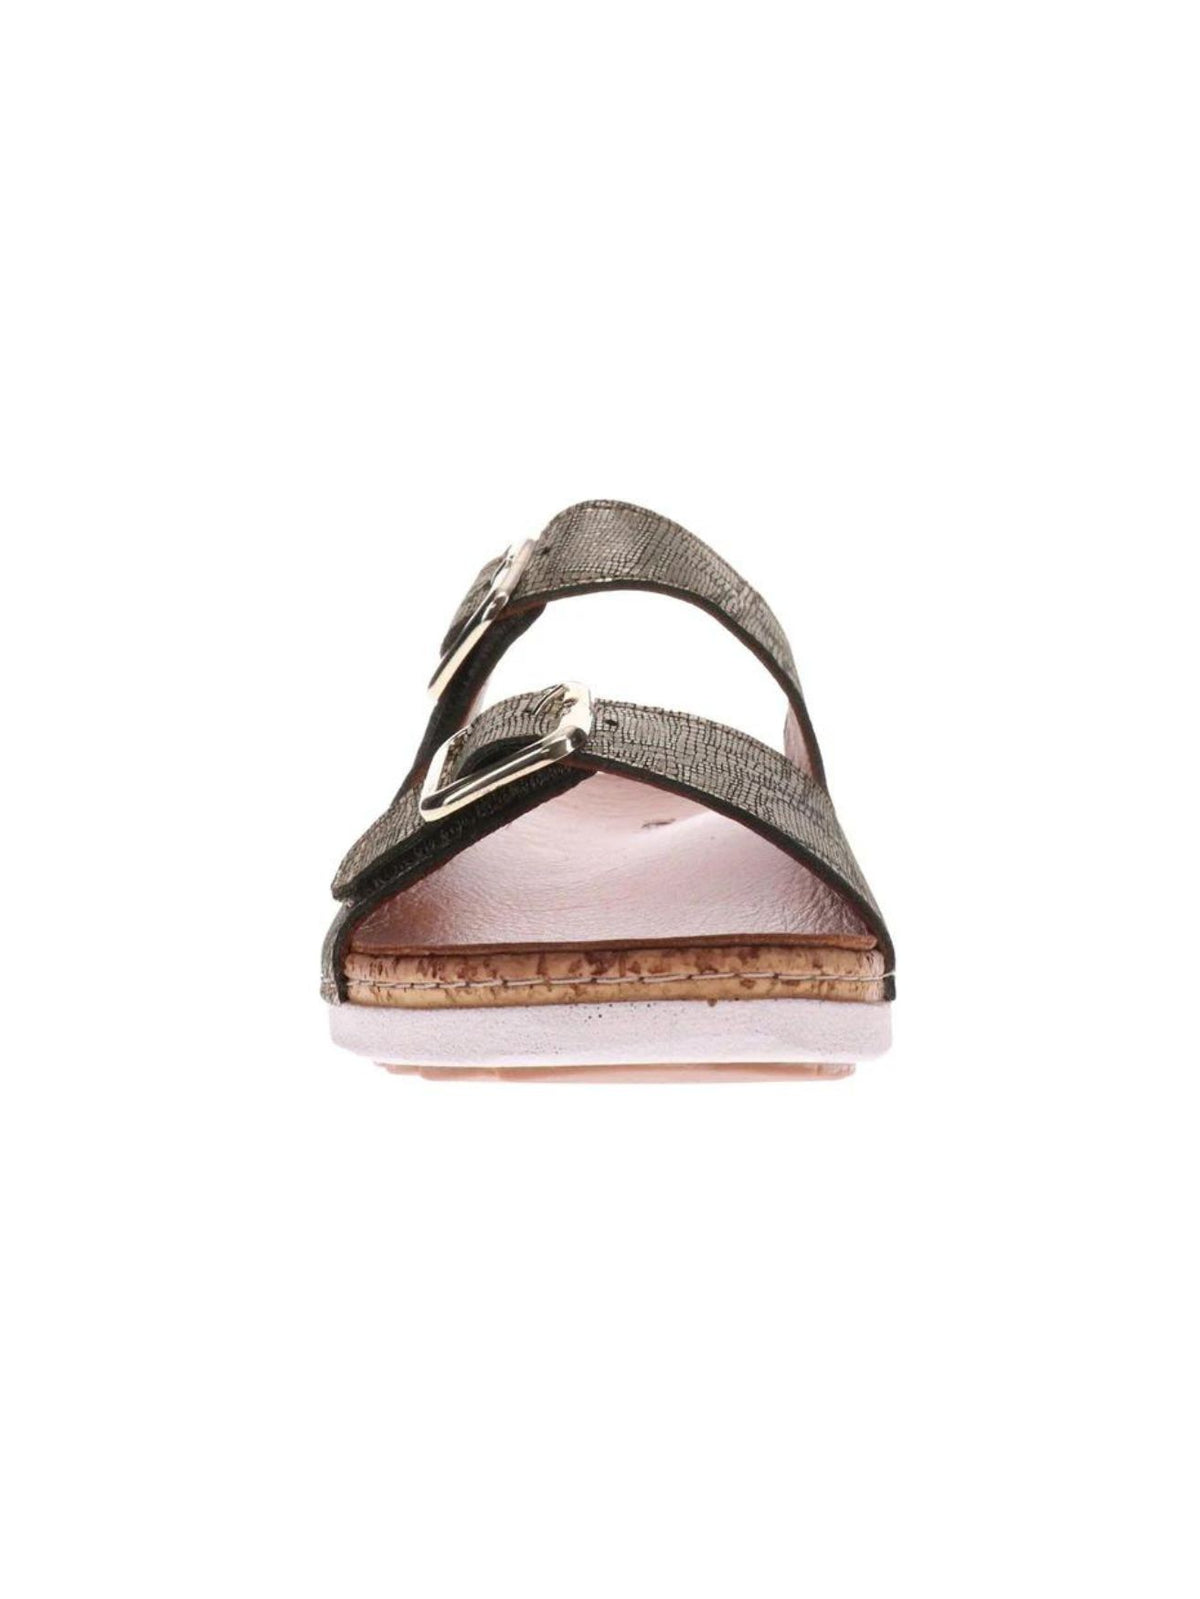 revere brighton 2 strap slide sandal in khaki diamond-front view